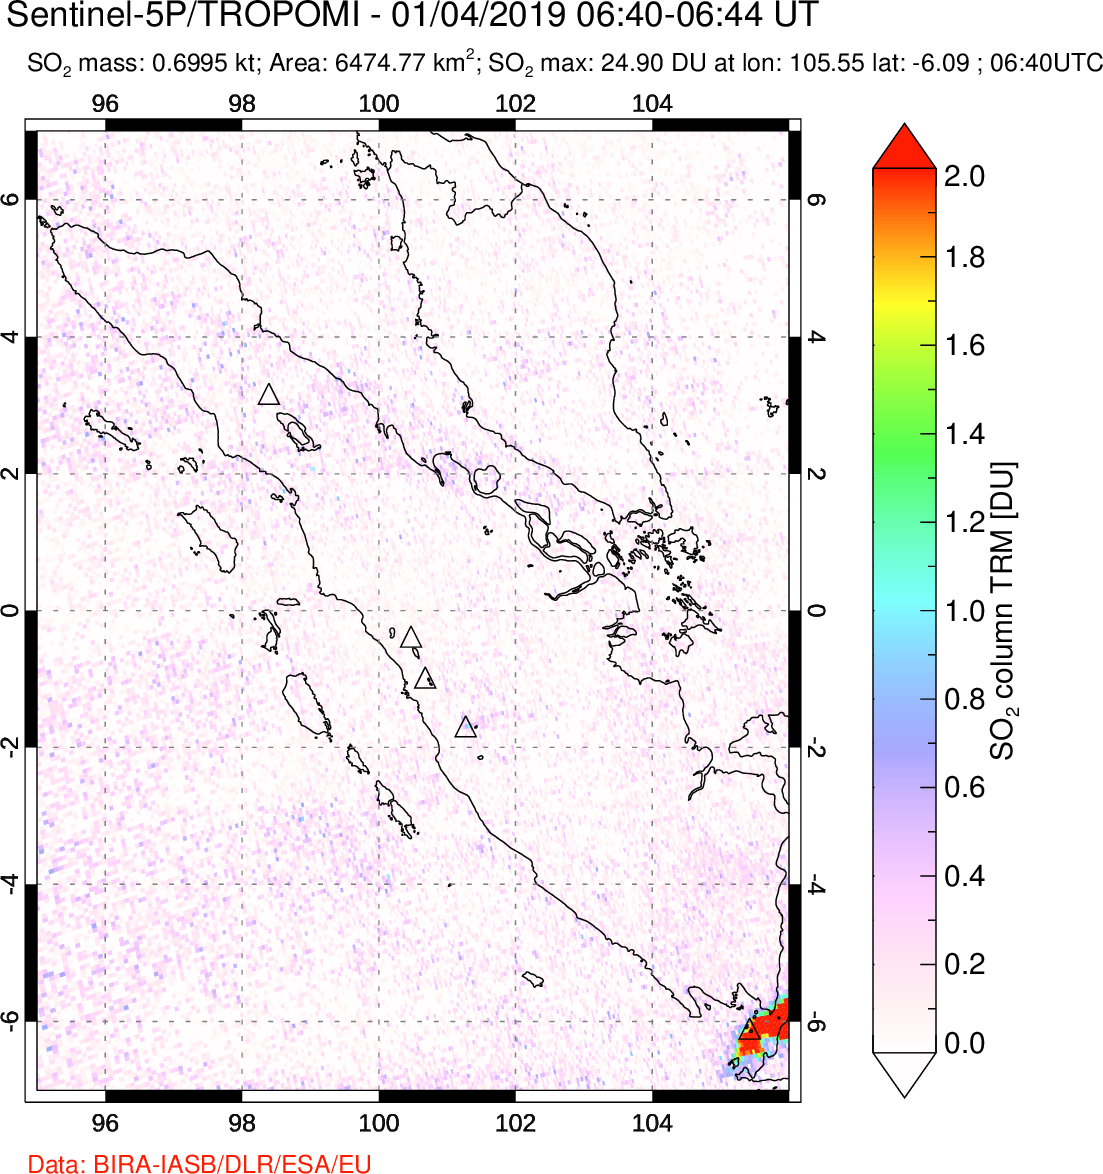 A sulfur dioxide image over Sumatra, Indonesia on Jan 04, 2019.